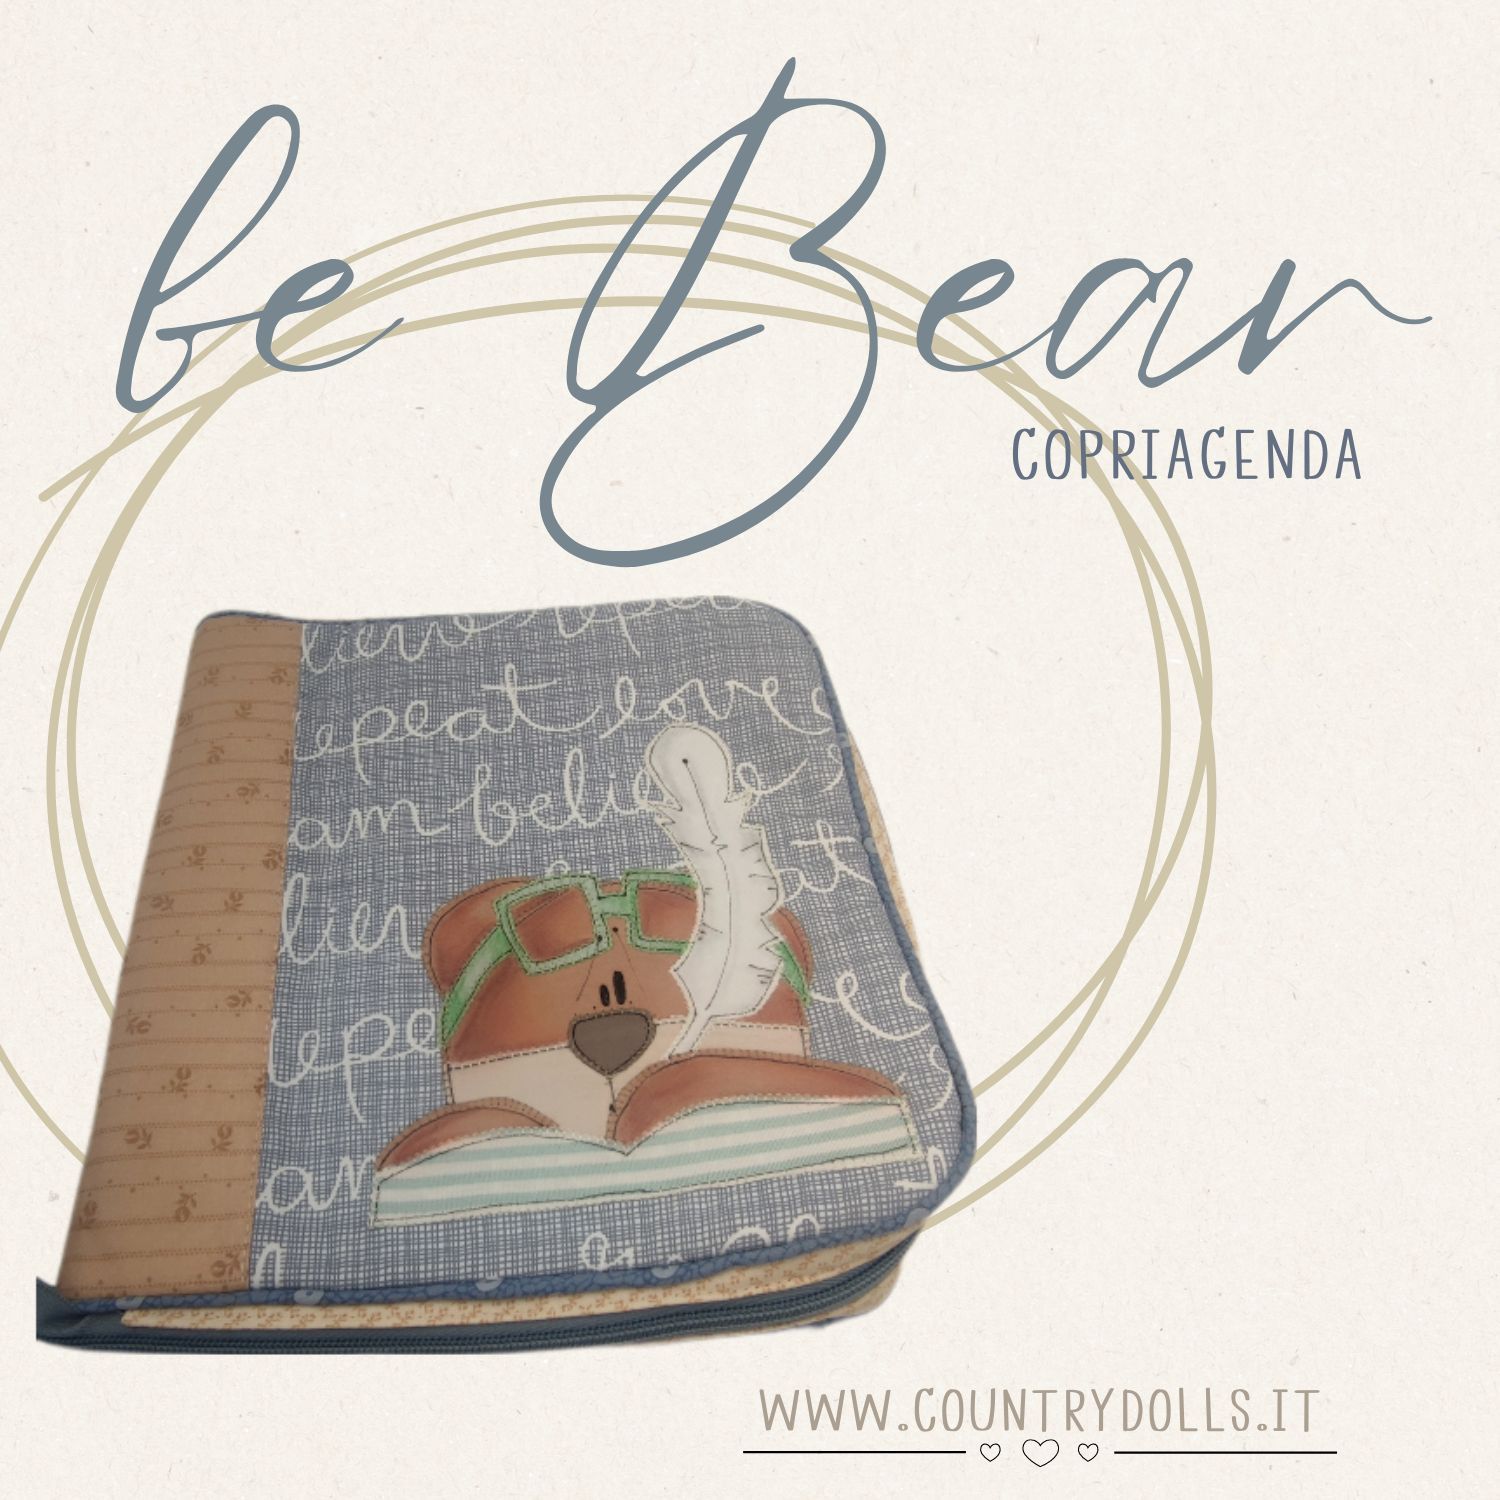 Bear Book - copriagenda